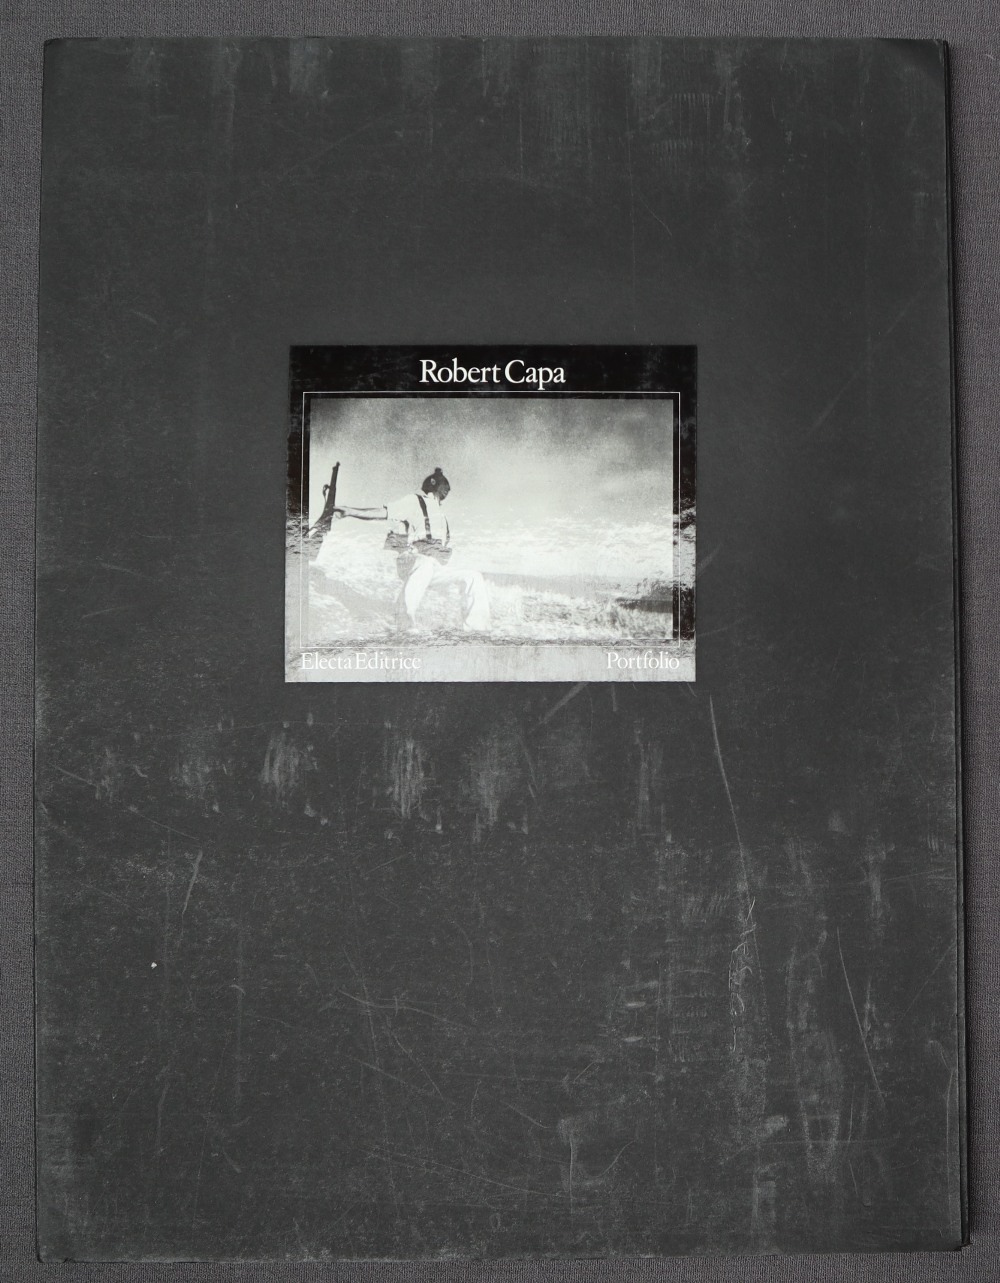 An Electa Editrice portfolio for Robert Capa, No. - Image 4 of 4